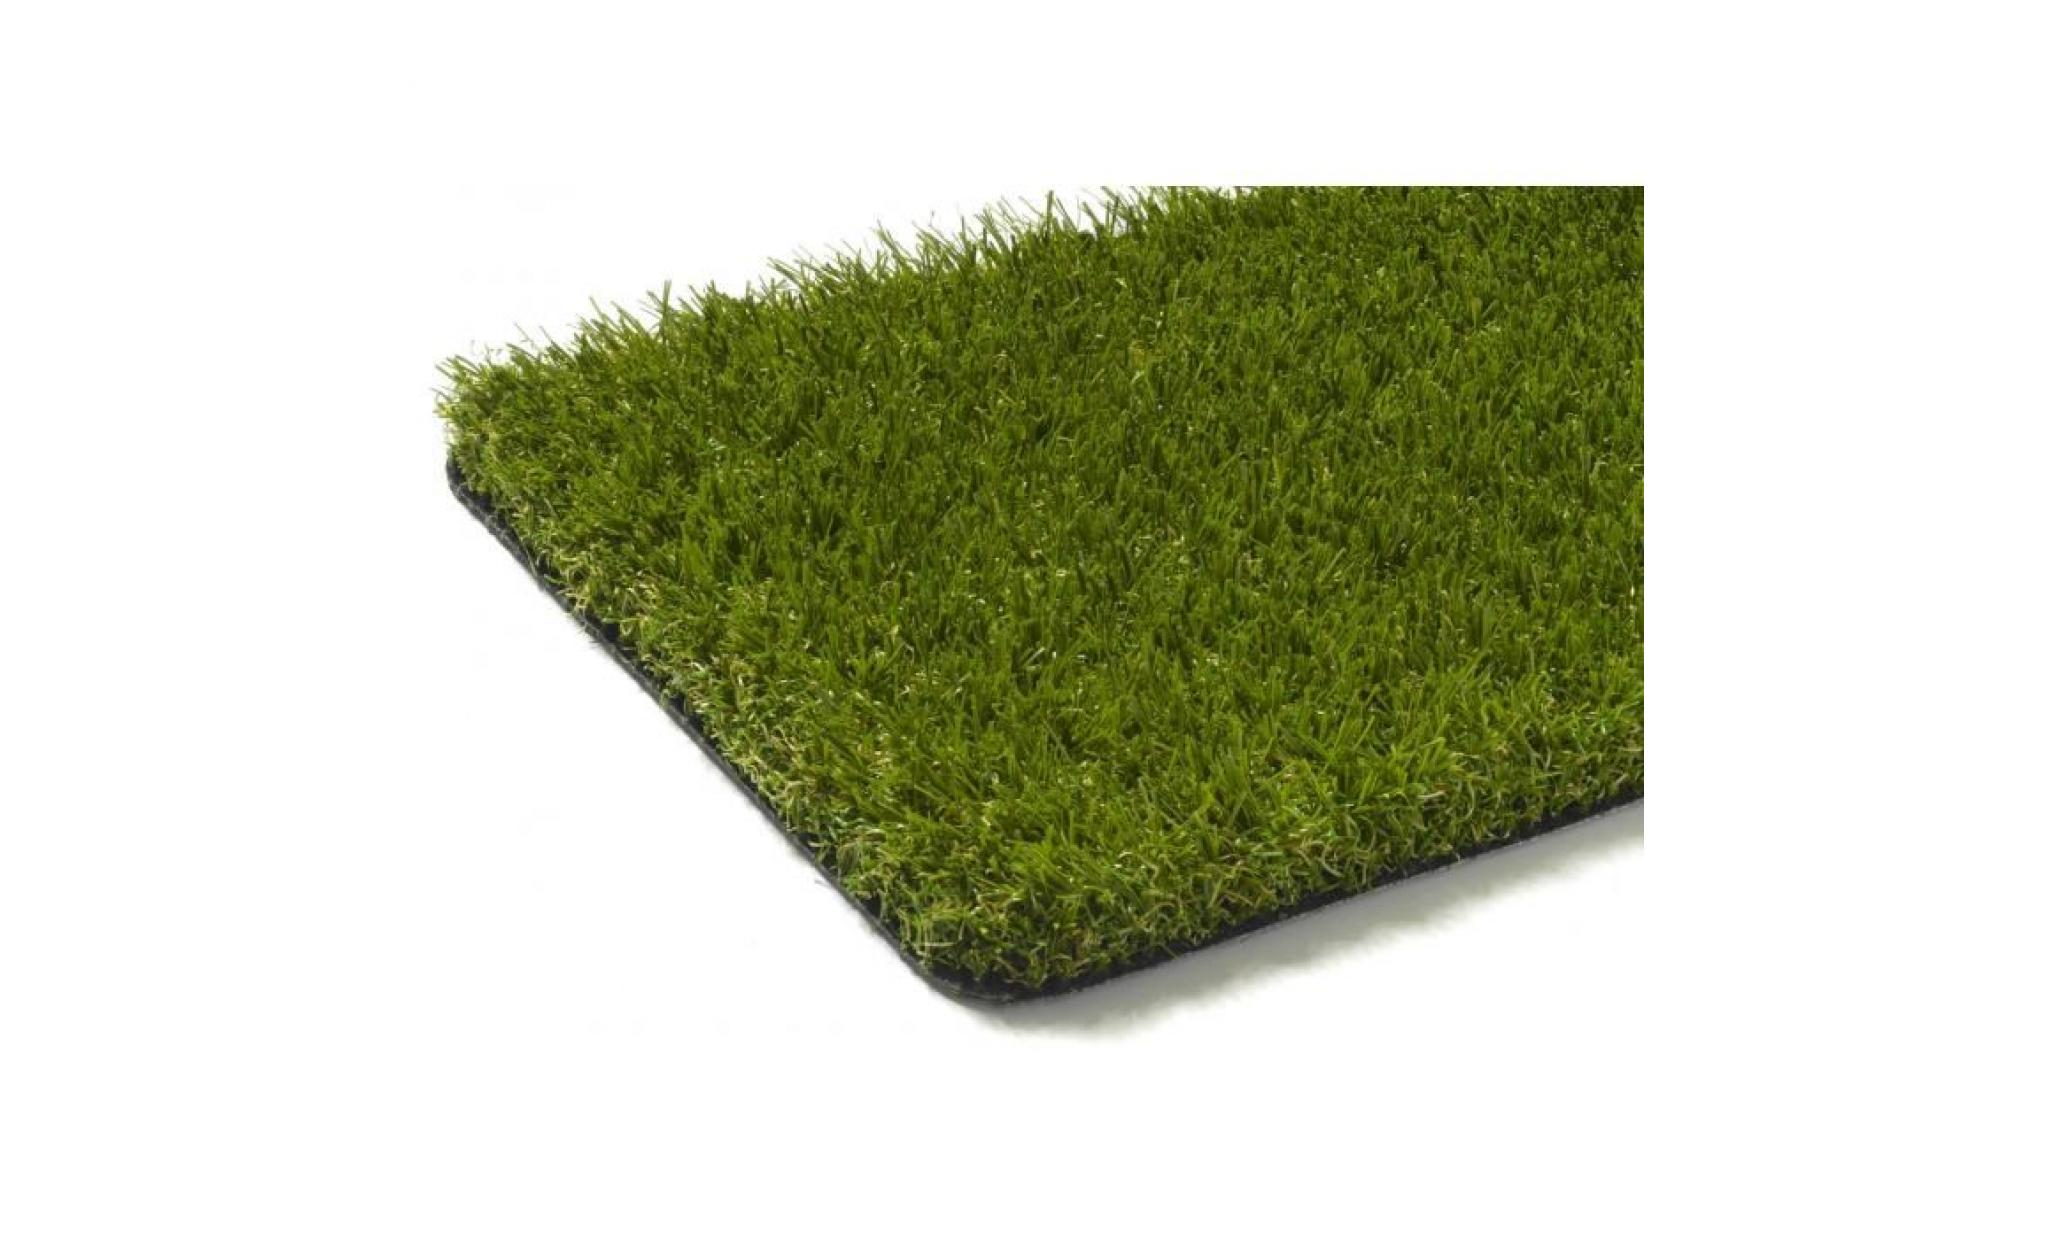 oxford   tapis type luxe gazon artificiel – pour jardin, terrasse, balcon   vert  [400x150 cm]